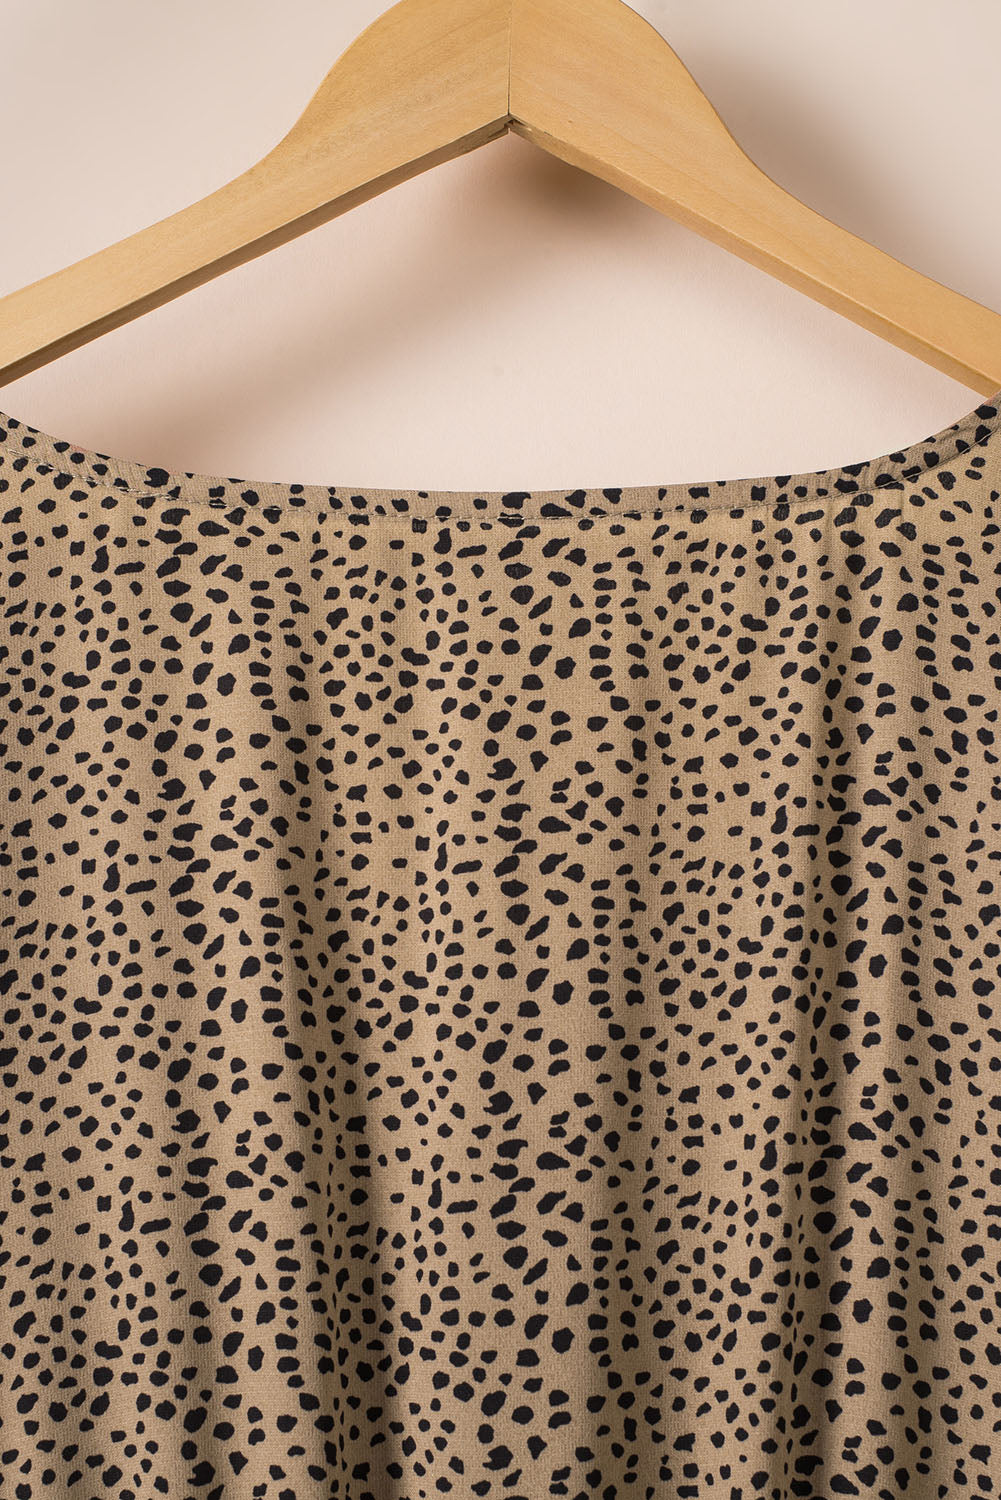 Leopard Spotted Ruffle Cuffs Elastic Waist Plus Size Dress